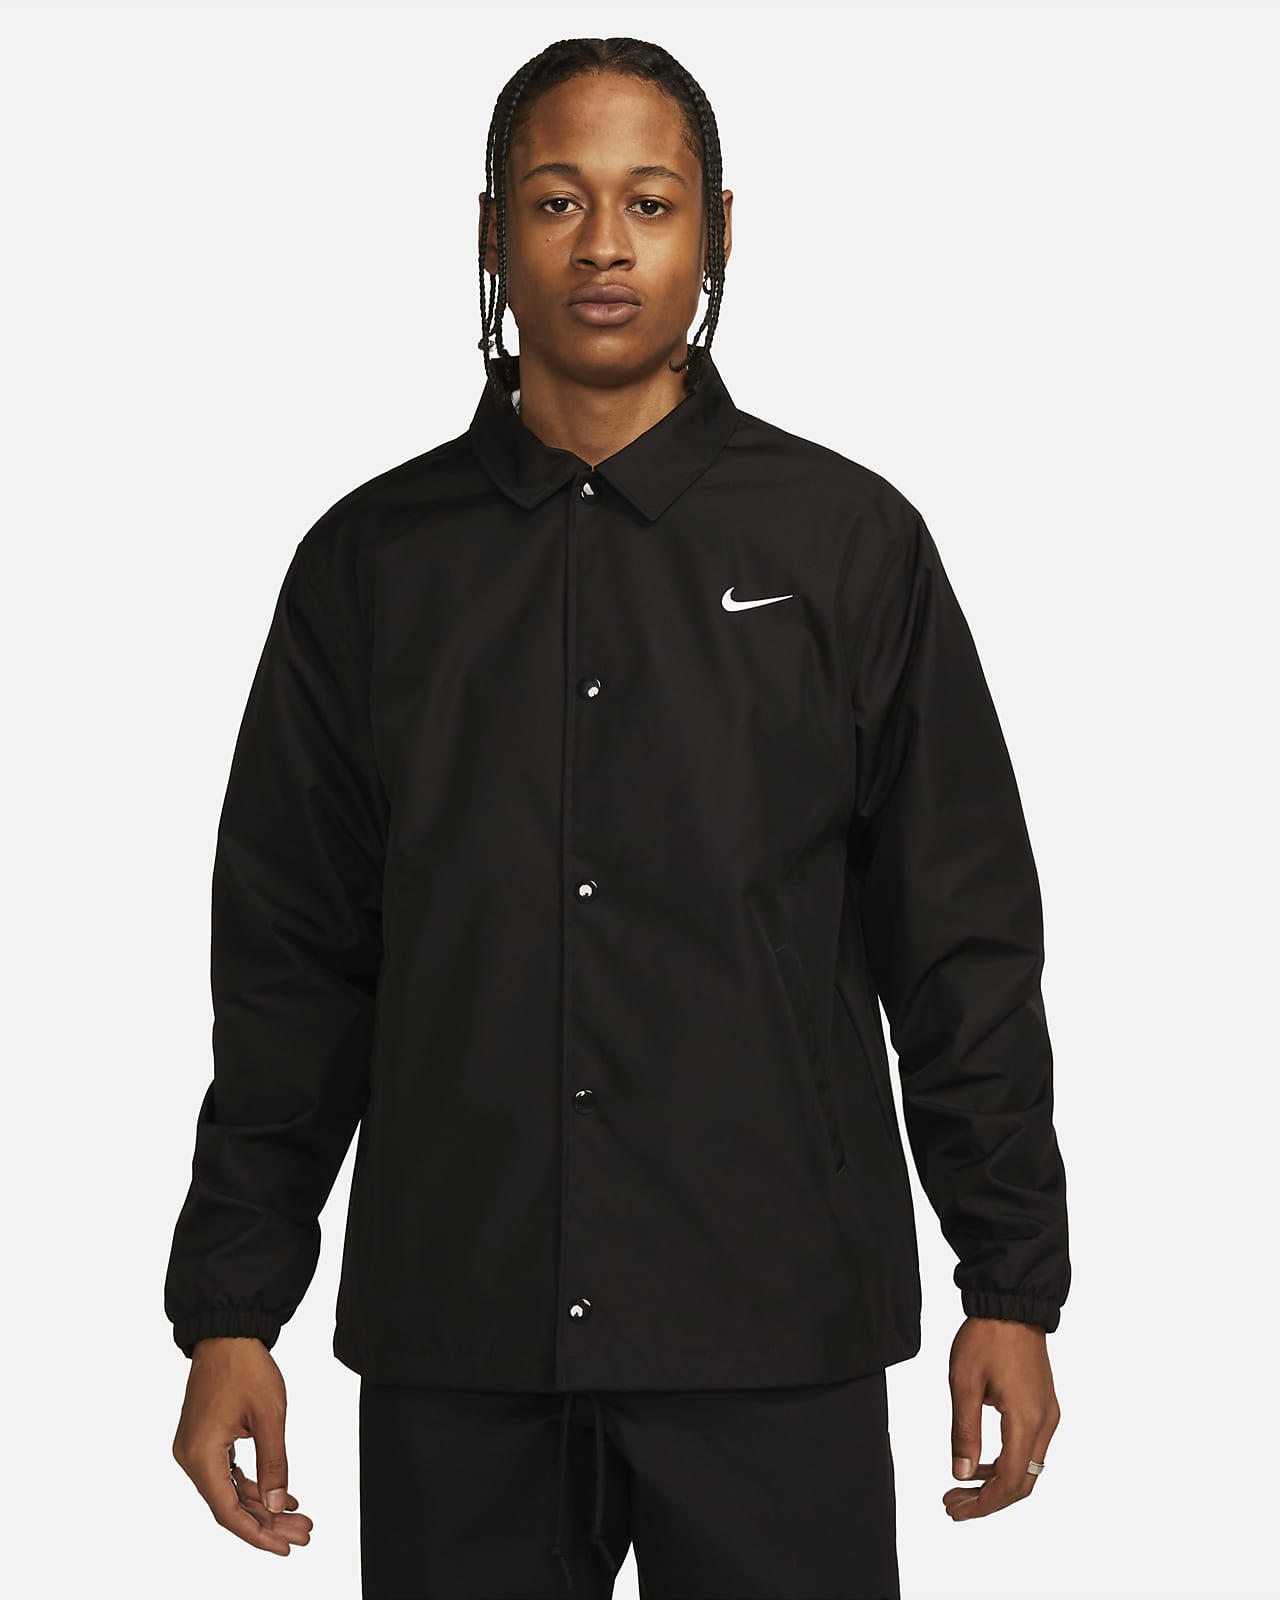 Nike Men's Lined Jacket. Nike.com